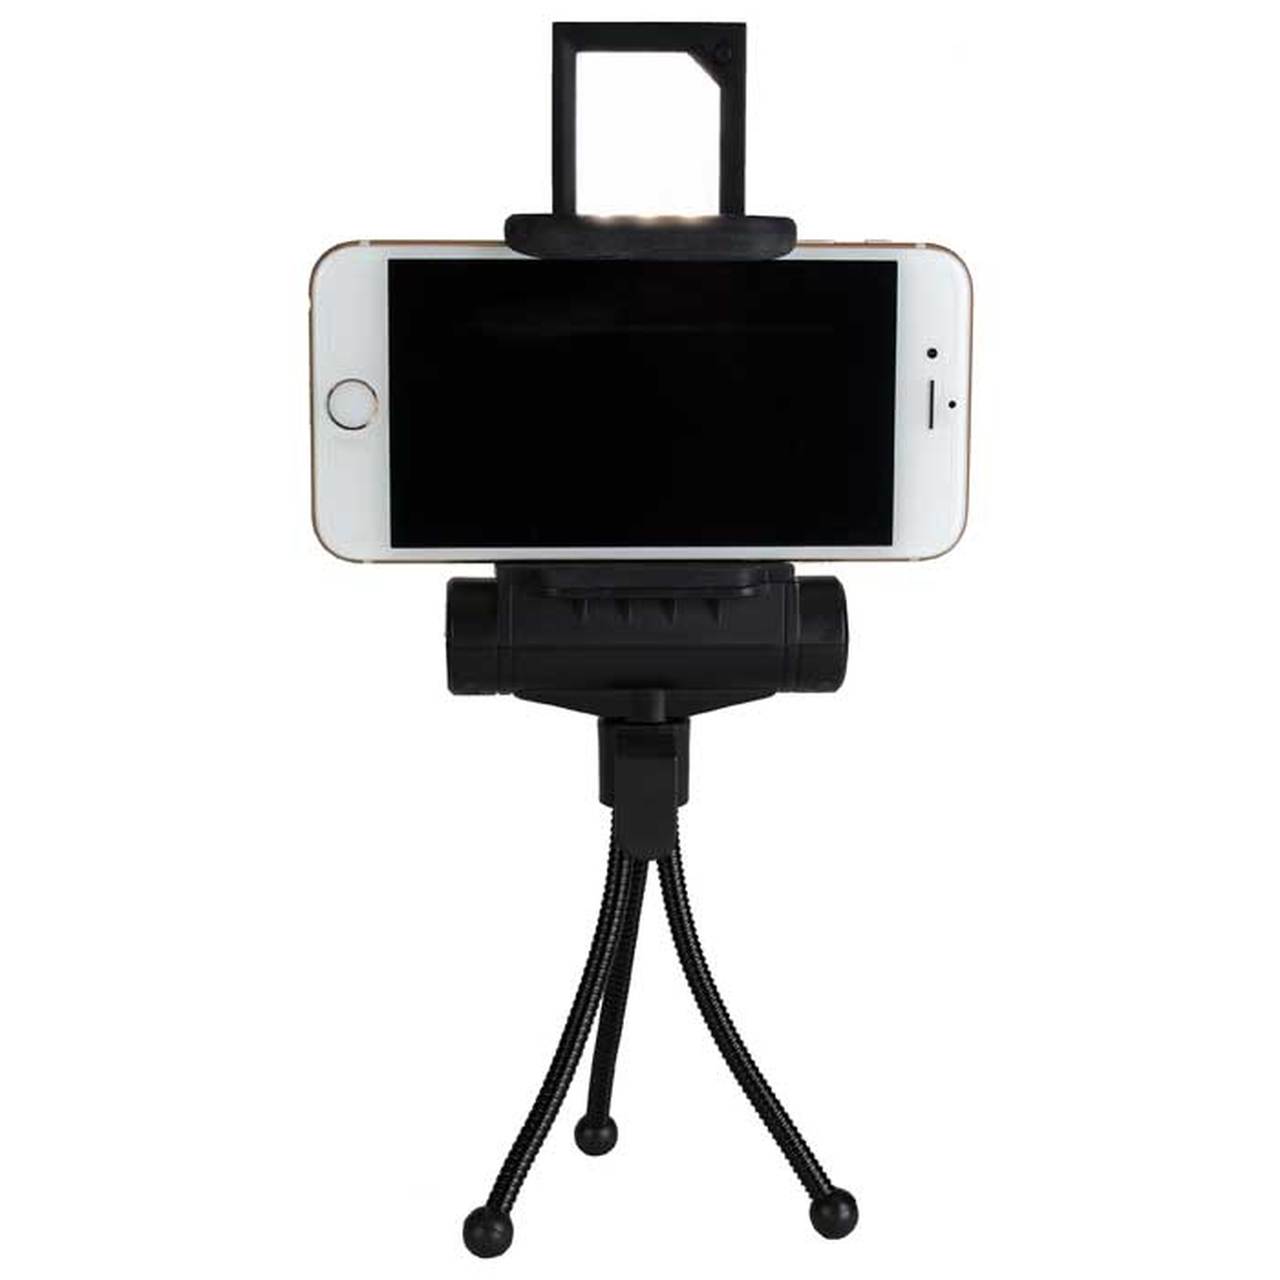 Promaster 5150 Bright Mount for Camera-Phone (Black)